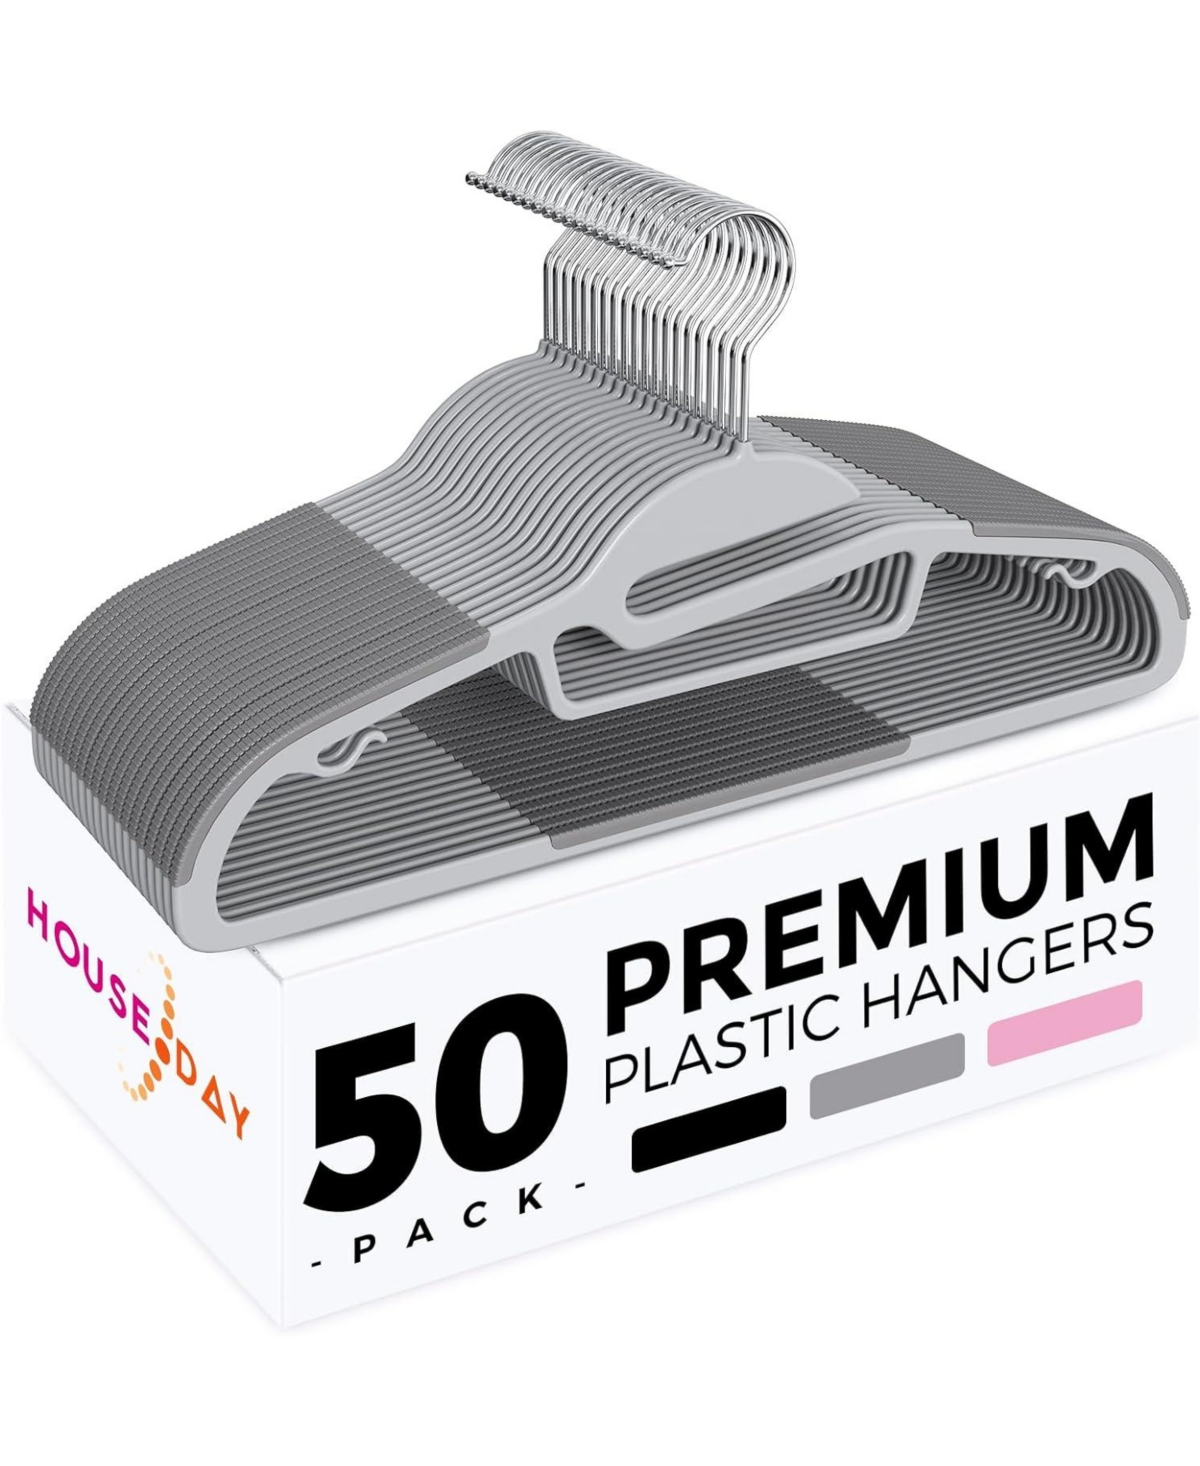 16.3 Inch Heavy Duty Plastic Hangers 50 Pack - Black